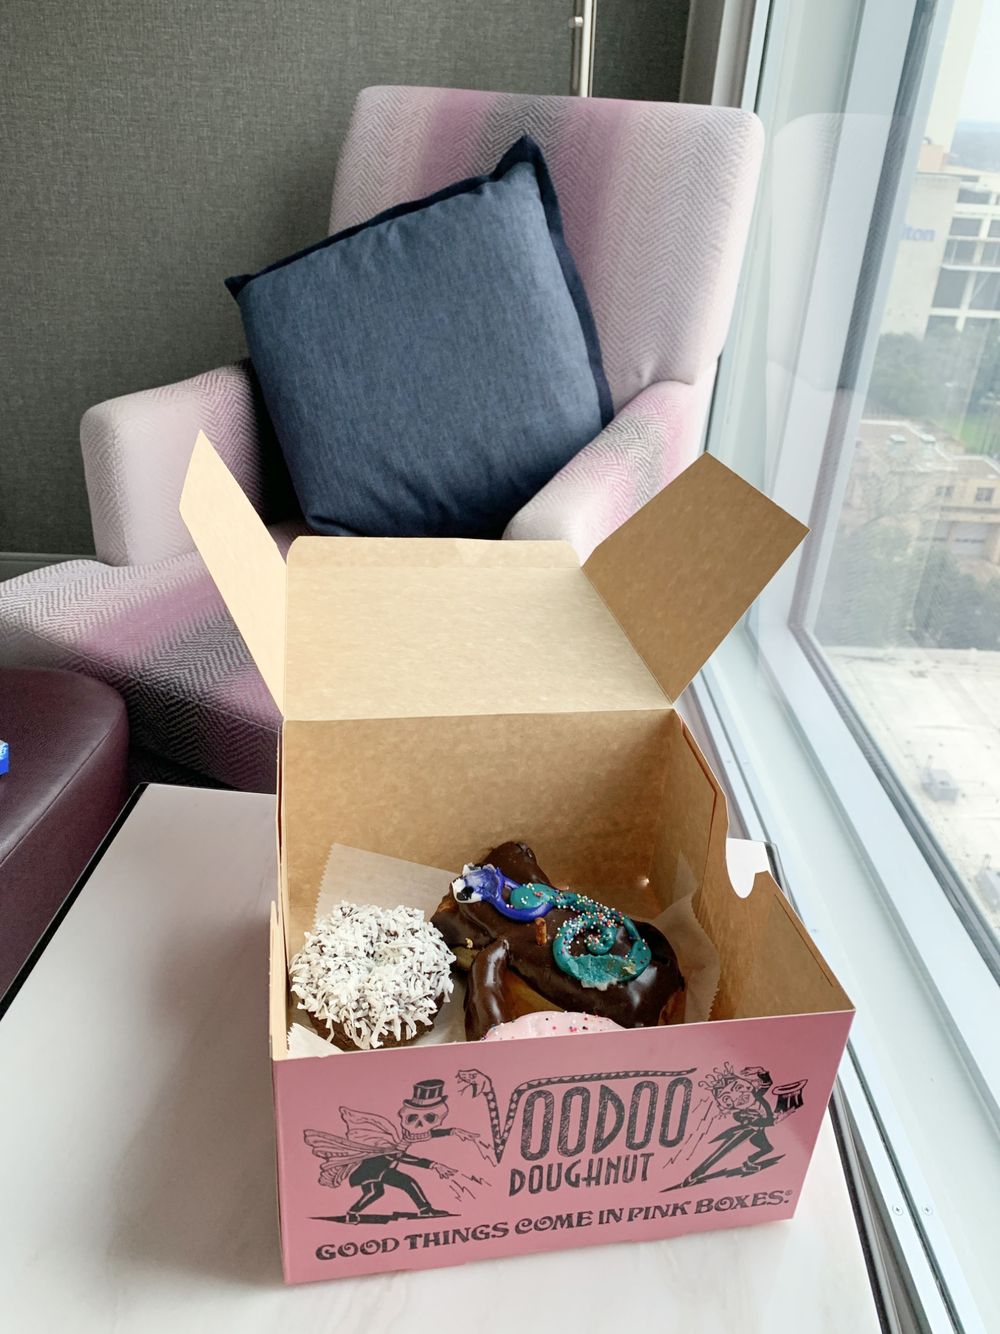 Voodoo Doughnut Austin Donuts